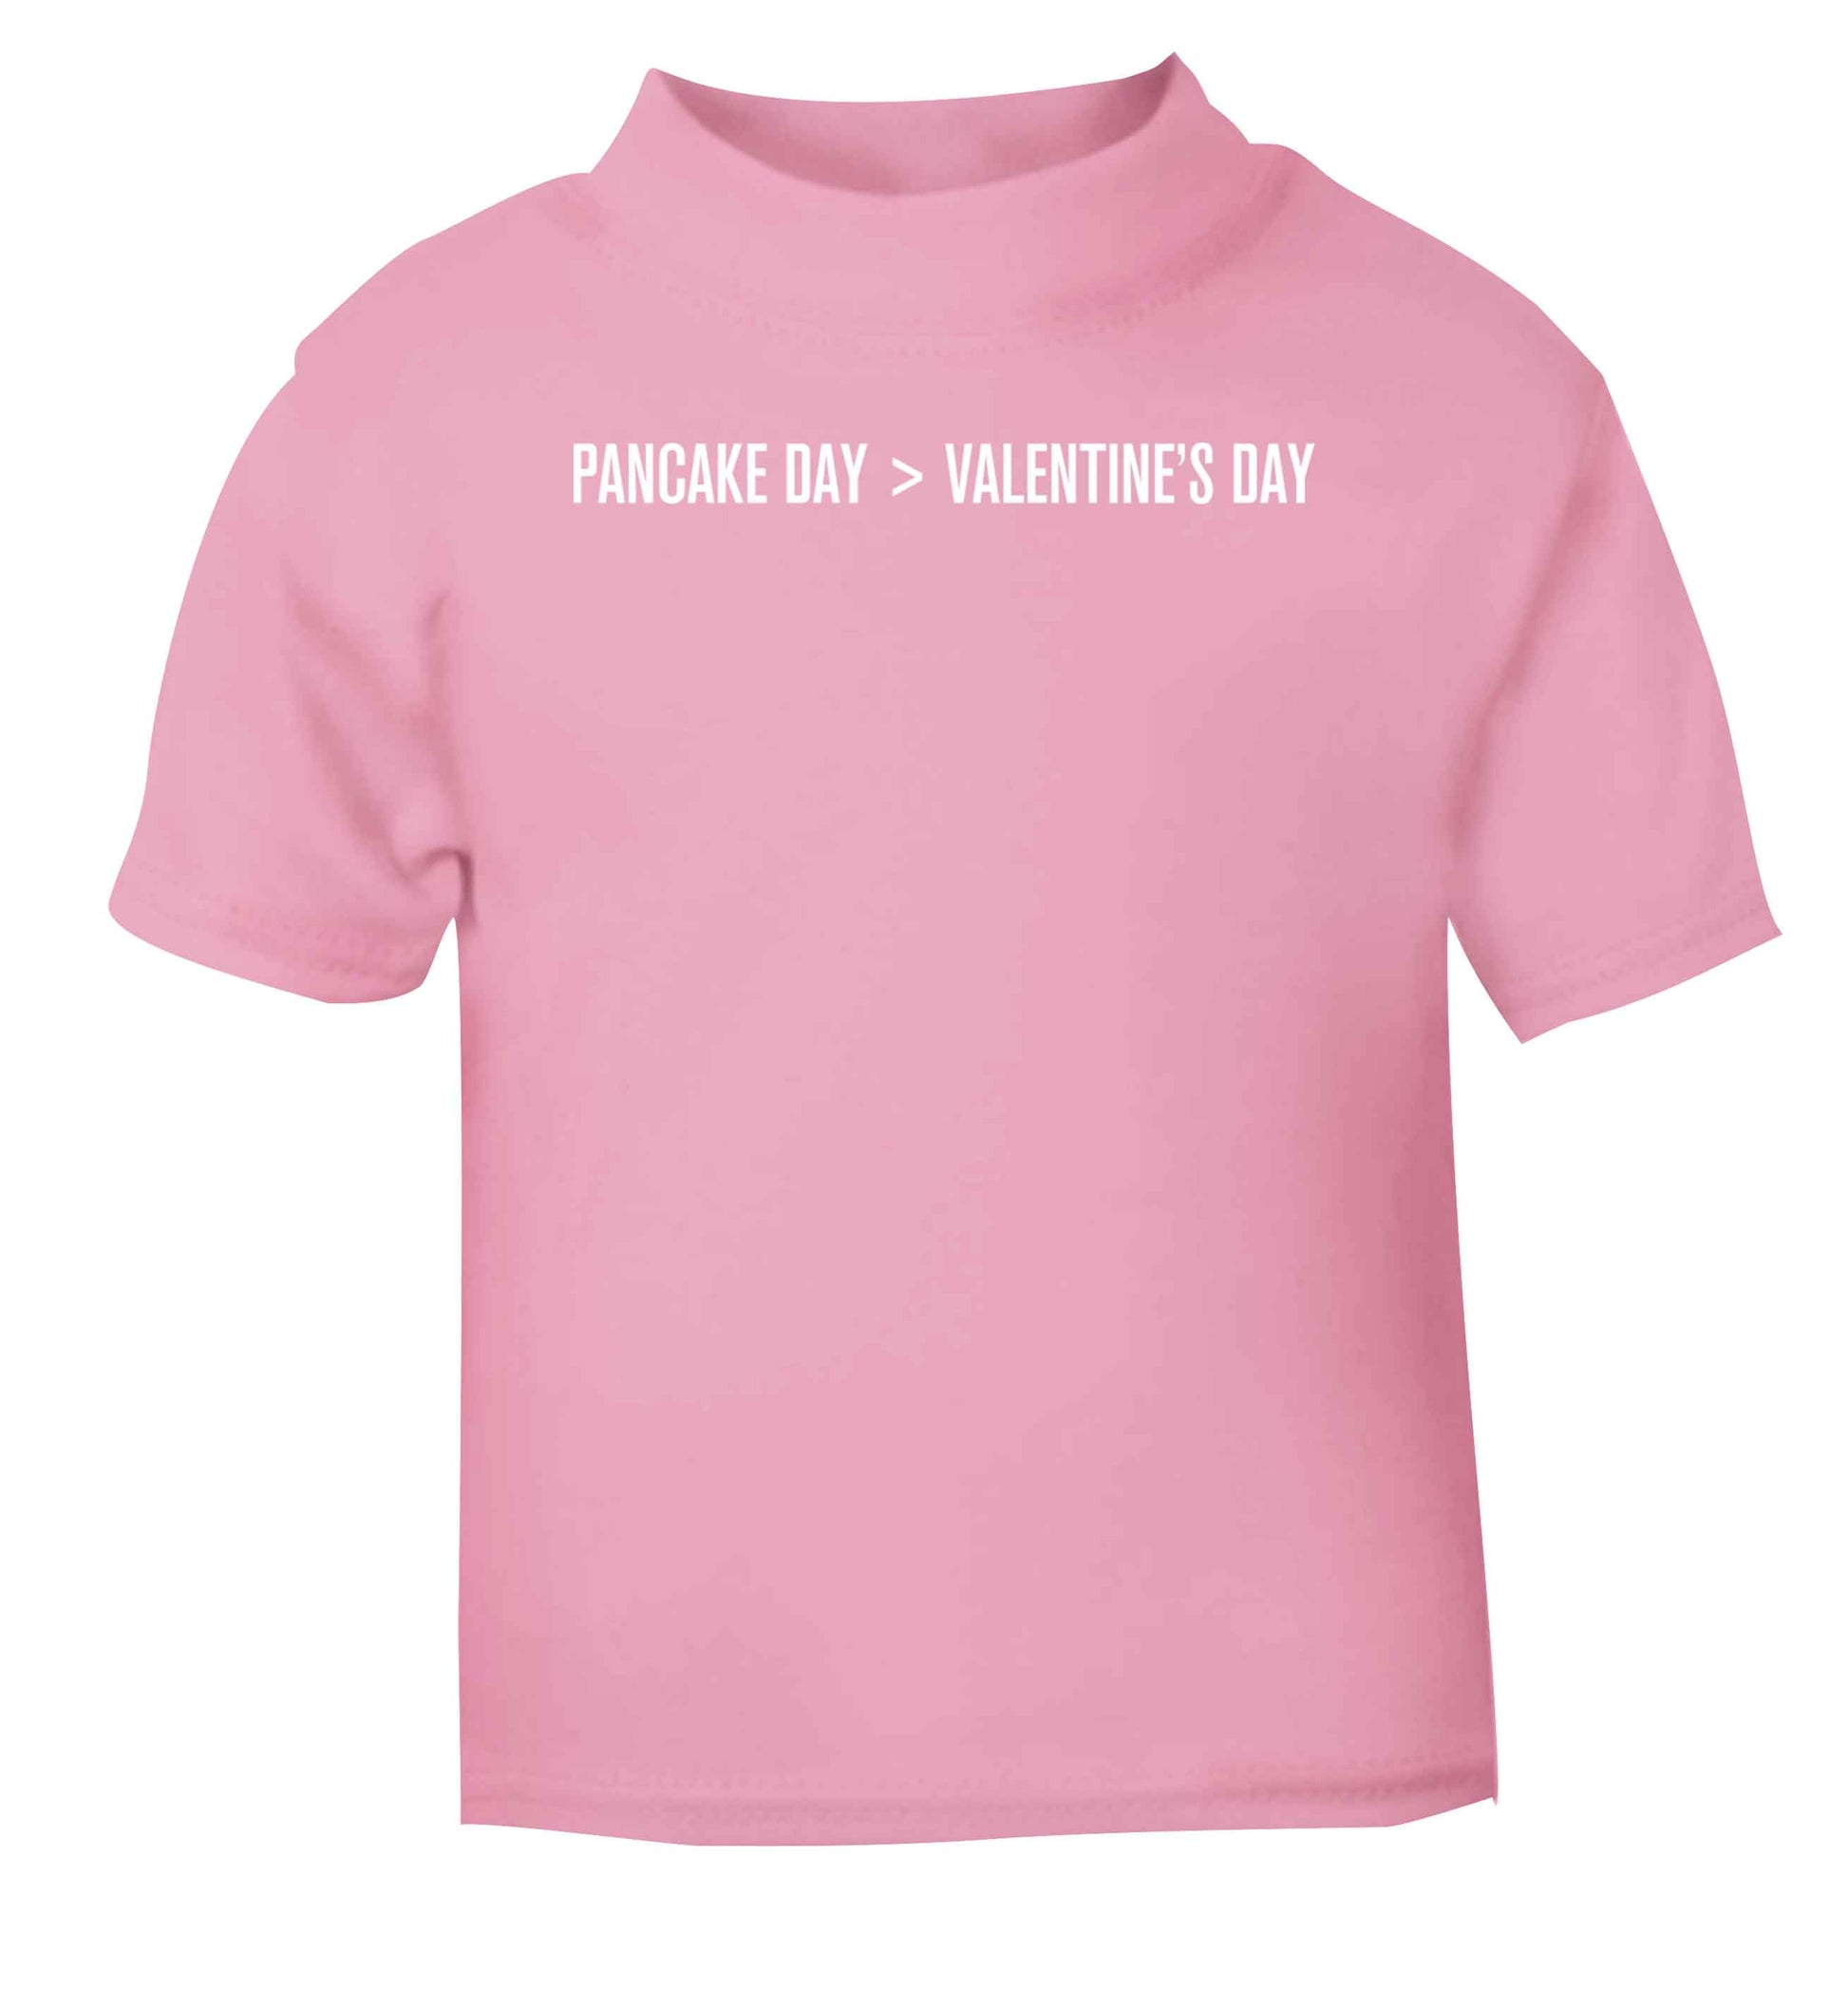 Pancake day > valentines day light pink baby toddler Tshirt 2 Years